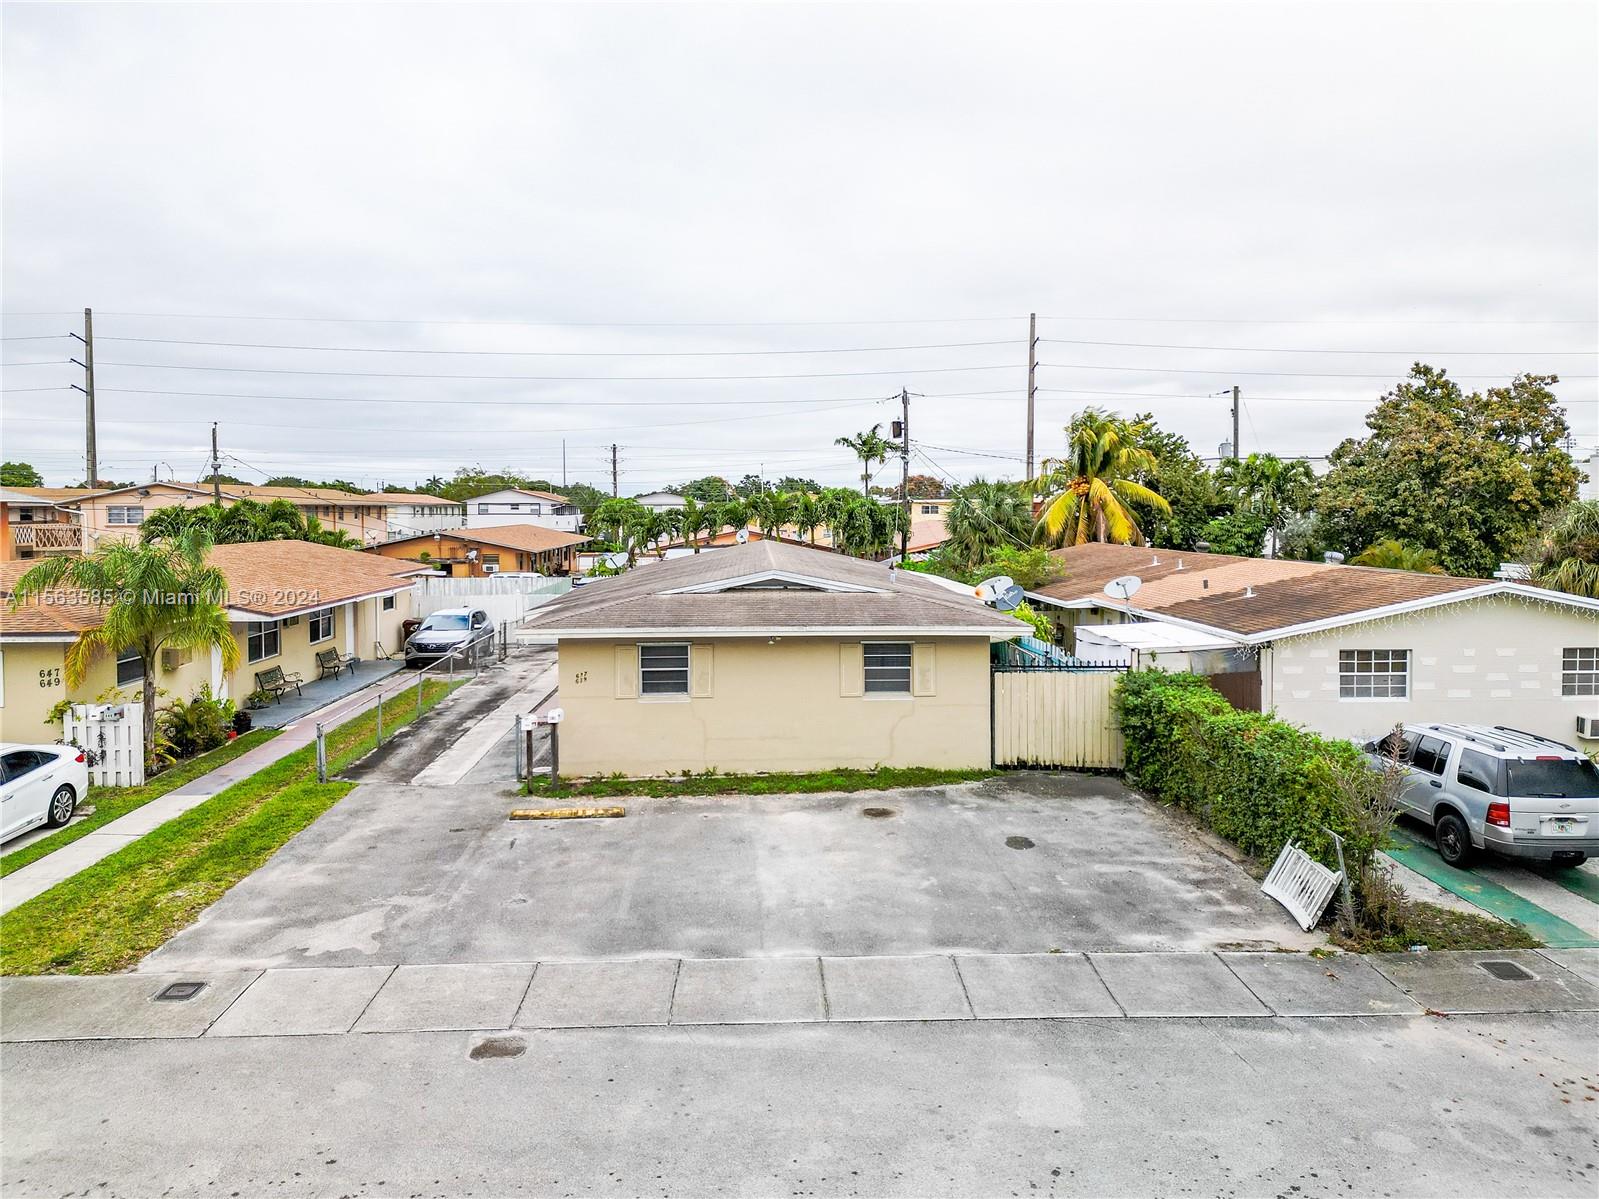 Rental Property at 637 W 28th St St, Hialeah, Miami-Dade County, Florida -  - $635,000 MO.